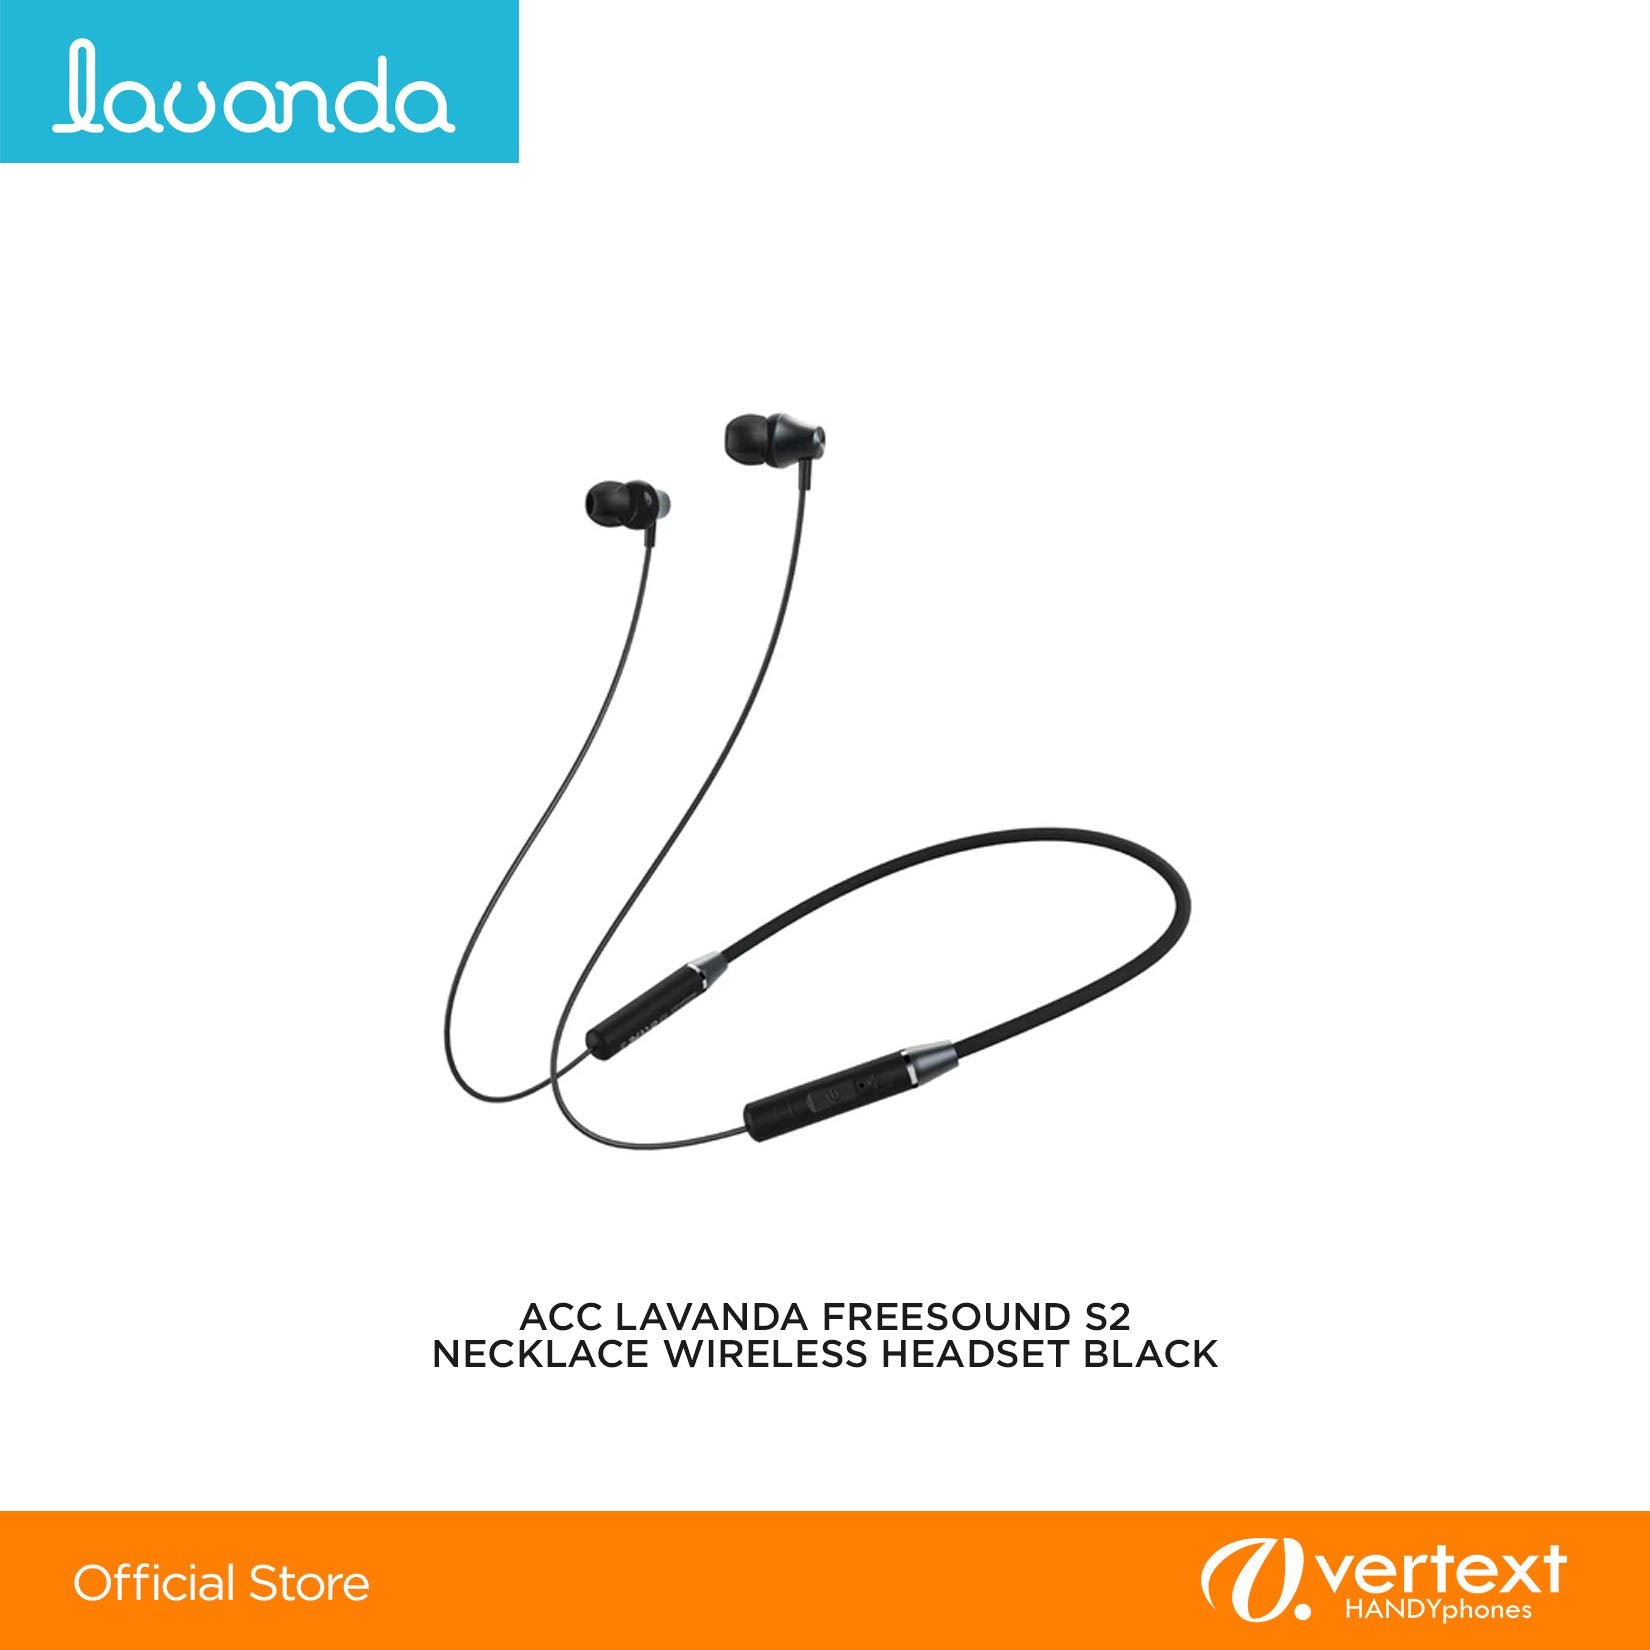 Lavanda FreeSound S2 Necklace Wireless Headset BLACK